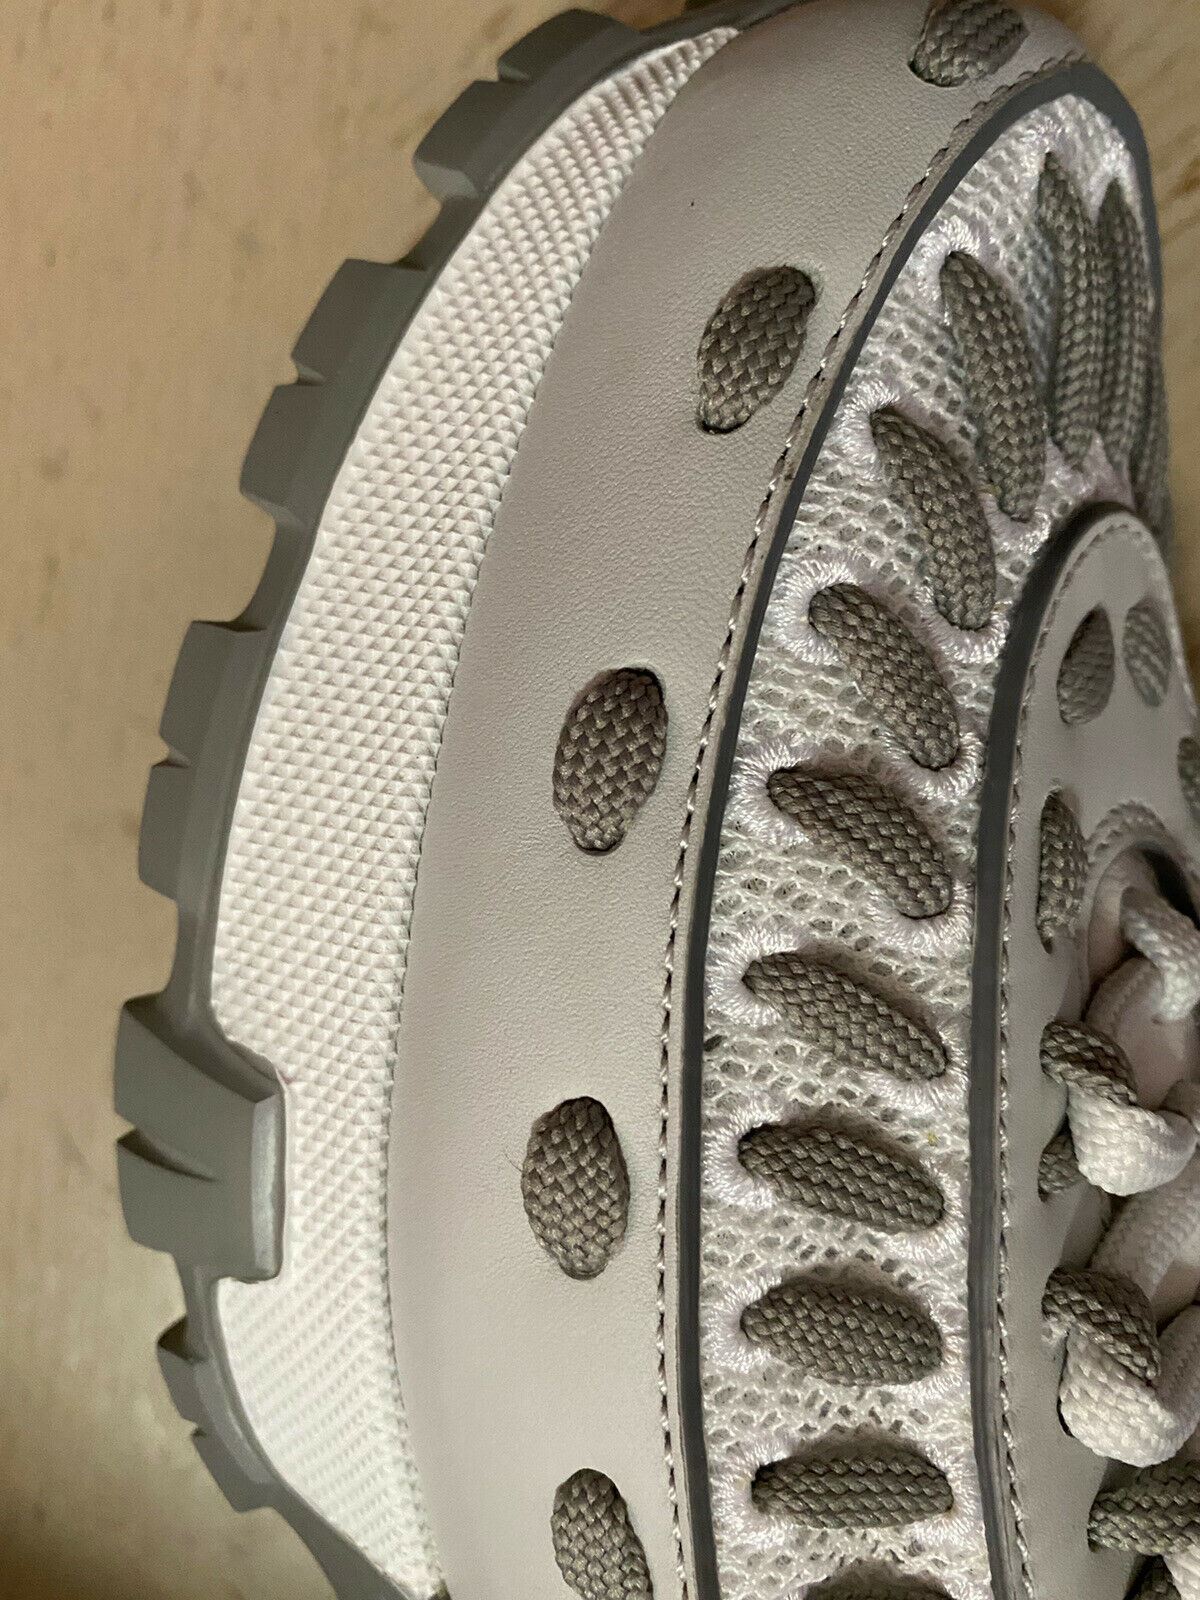 New $795 Ermenegildo Zegna Couture Leather Sneakers Shoes White/Gray 9.5 US Ita